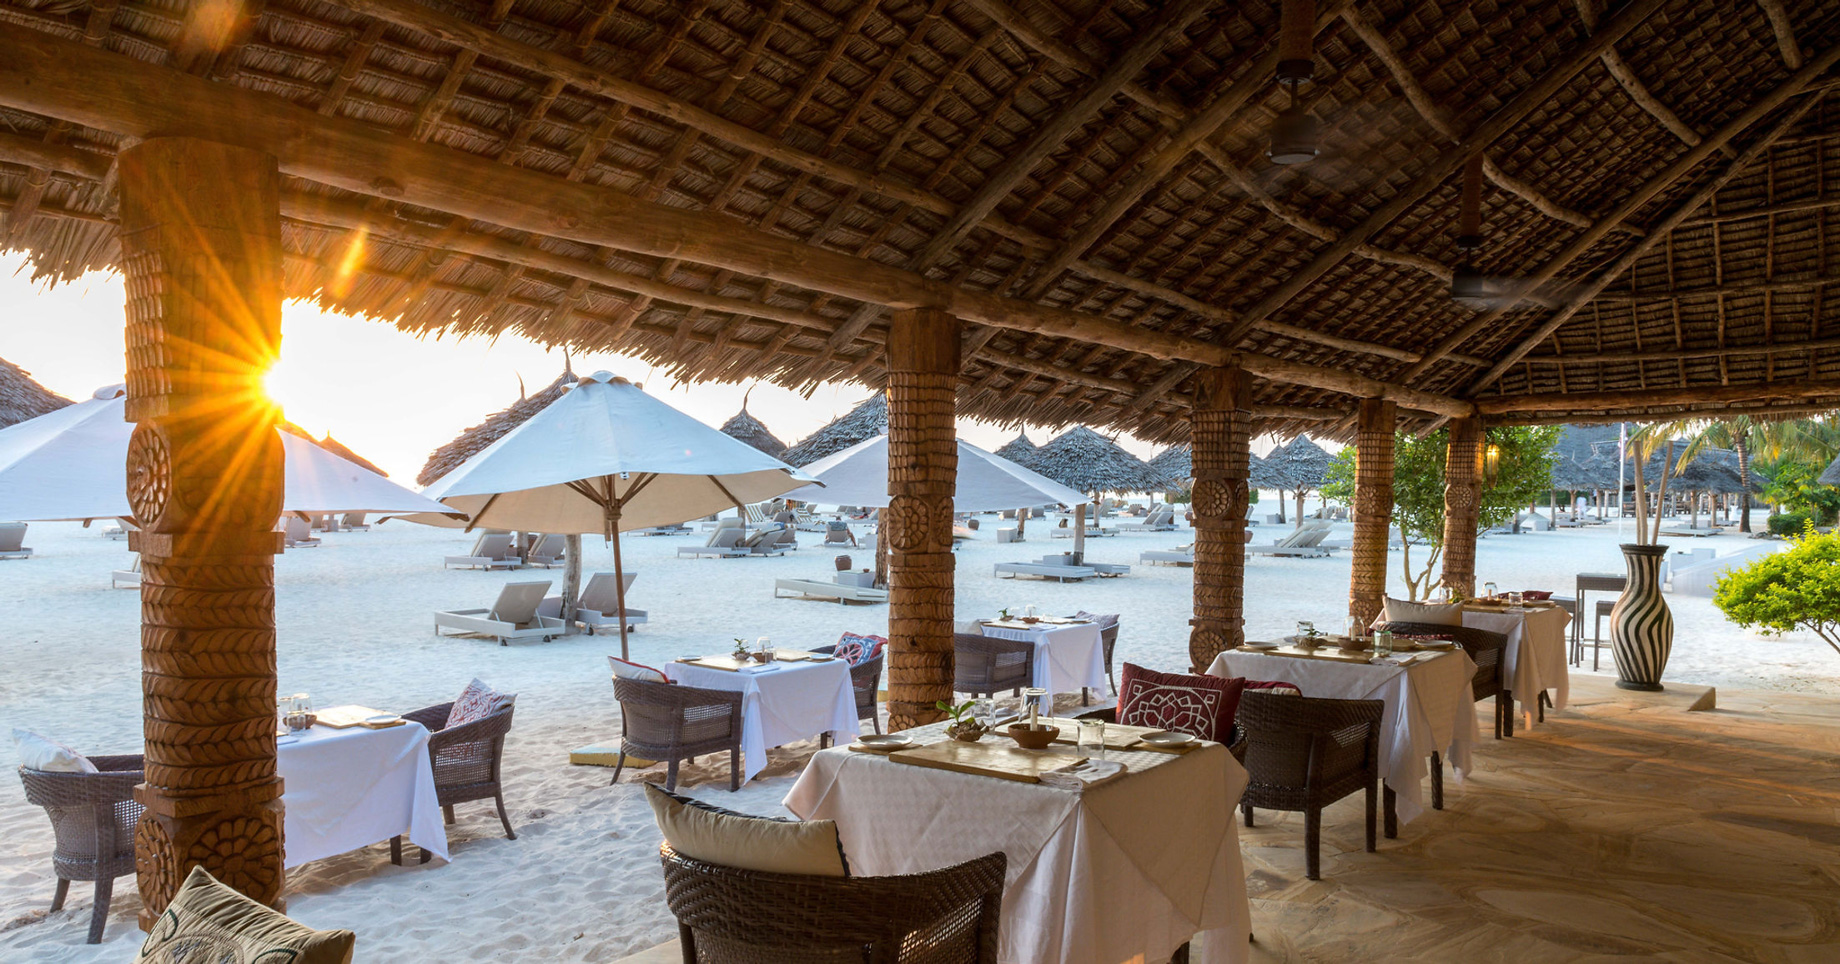 Gold Zanzibar Beach House & Spa Resort – Nungwi, Zanzibar, Tanzania – Gold Restaurant Beach View Dining